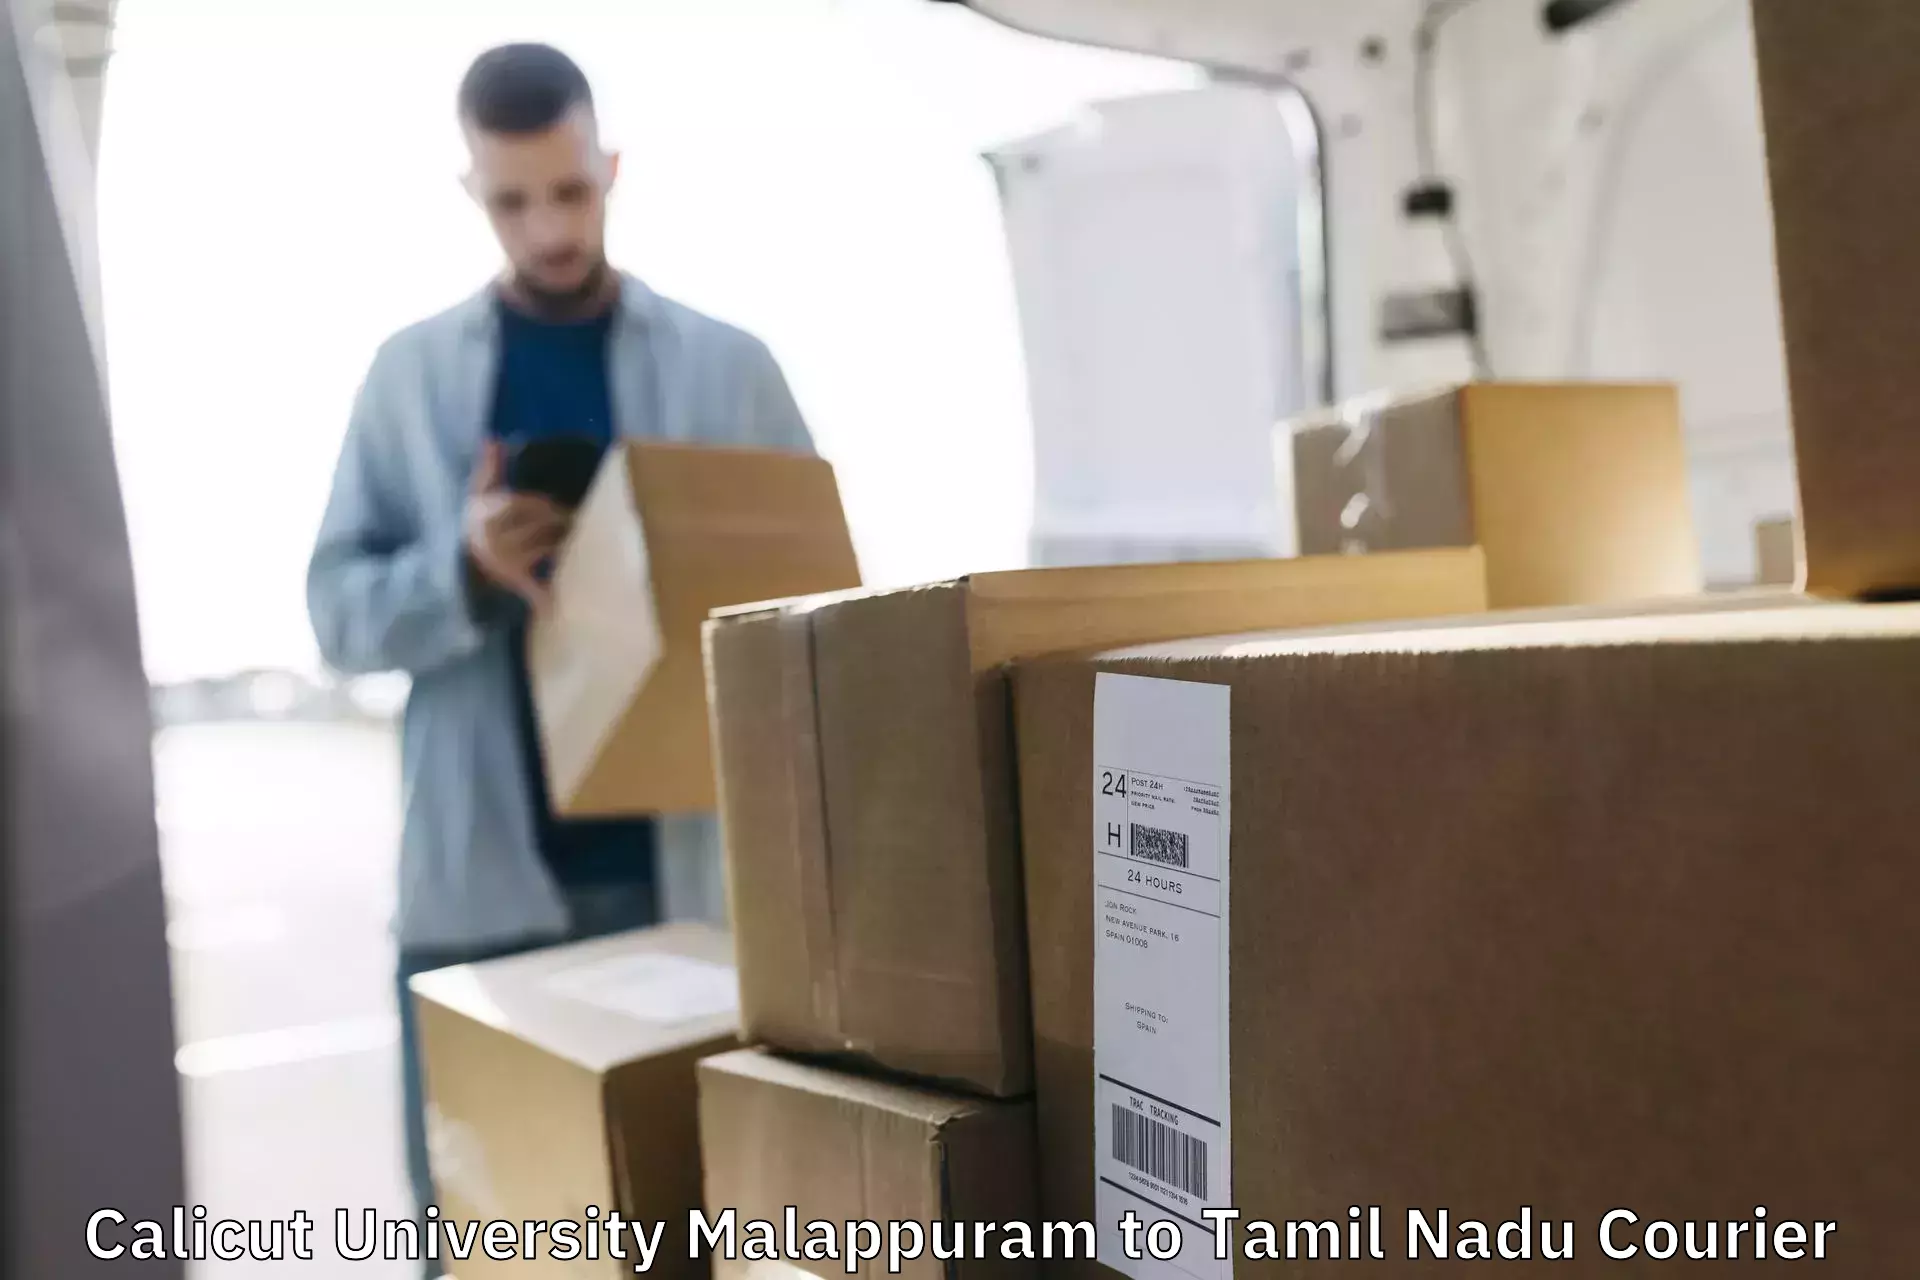 Courier service innovation Calicut University Malappuram to Ambasamudram